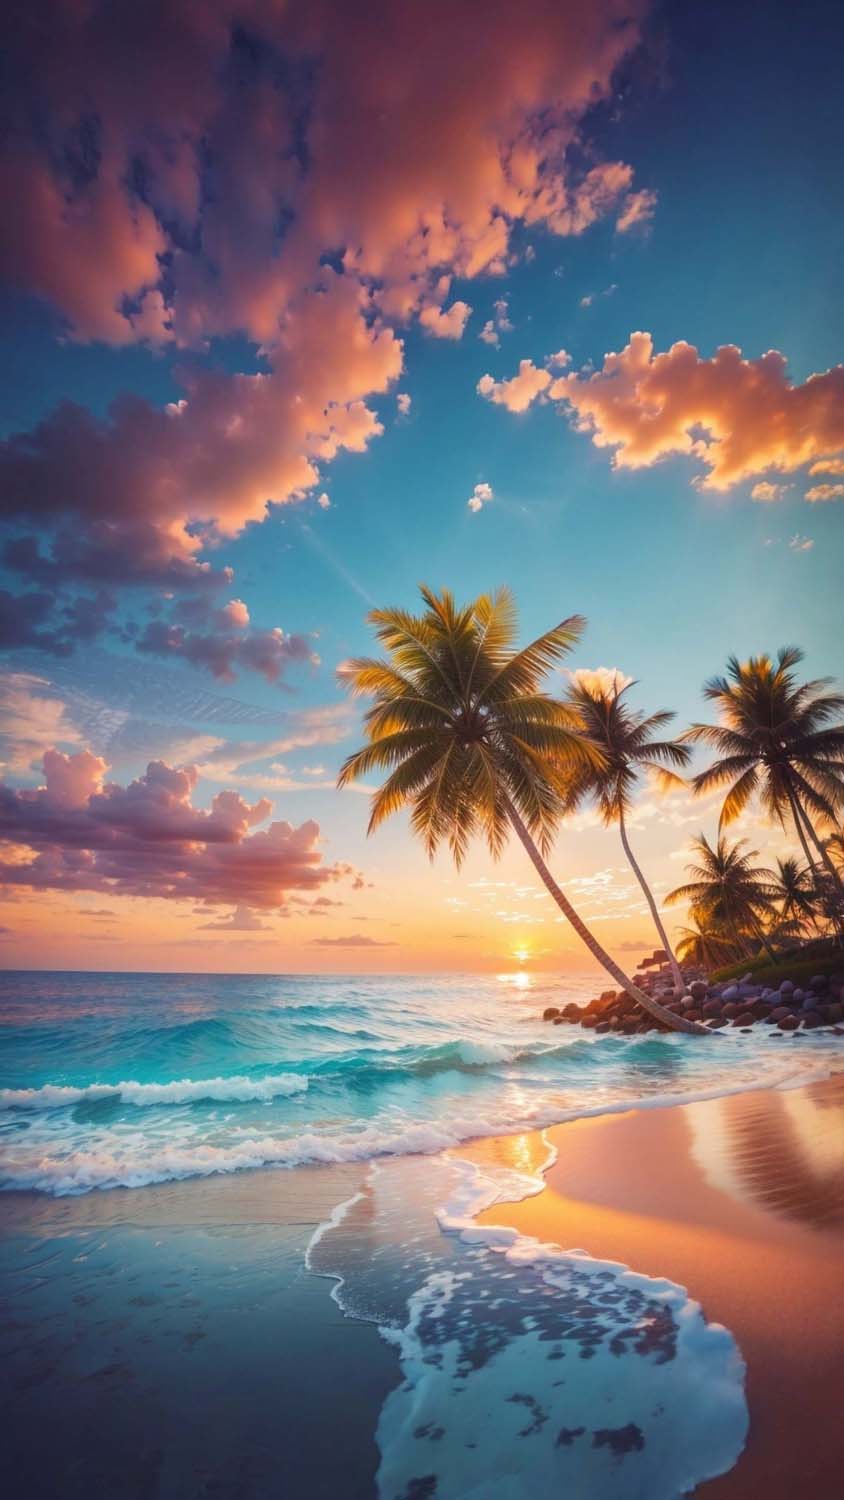 Beach Sunset Horizon Vibes iPhone Wallpaper